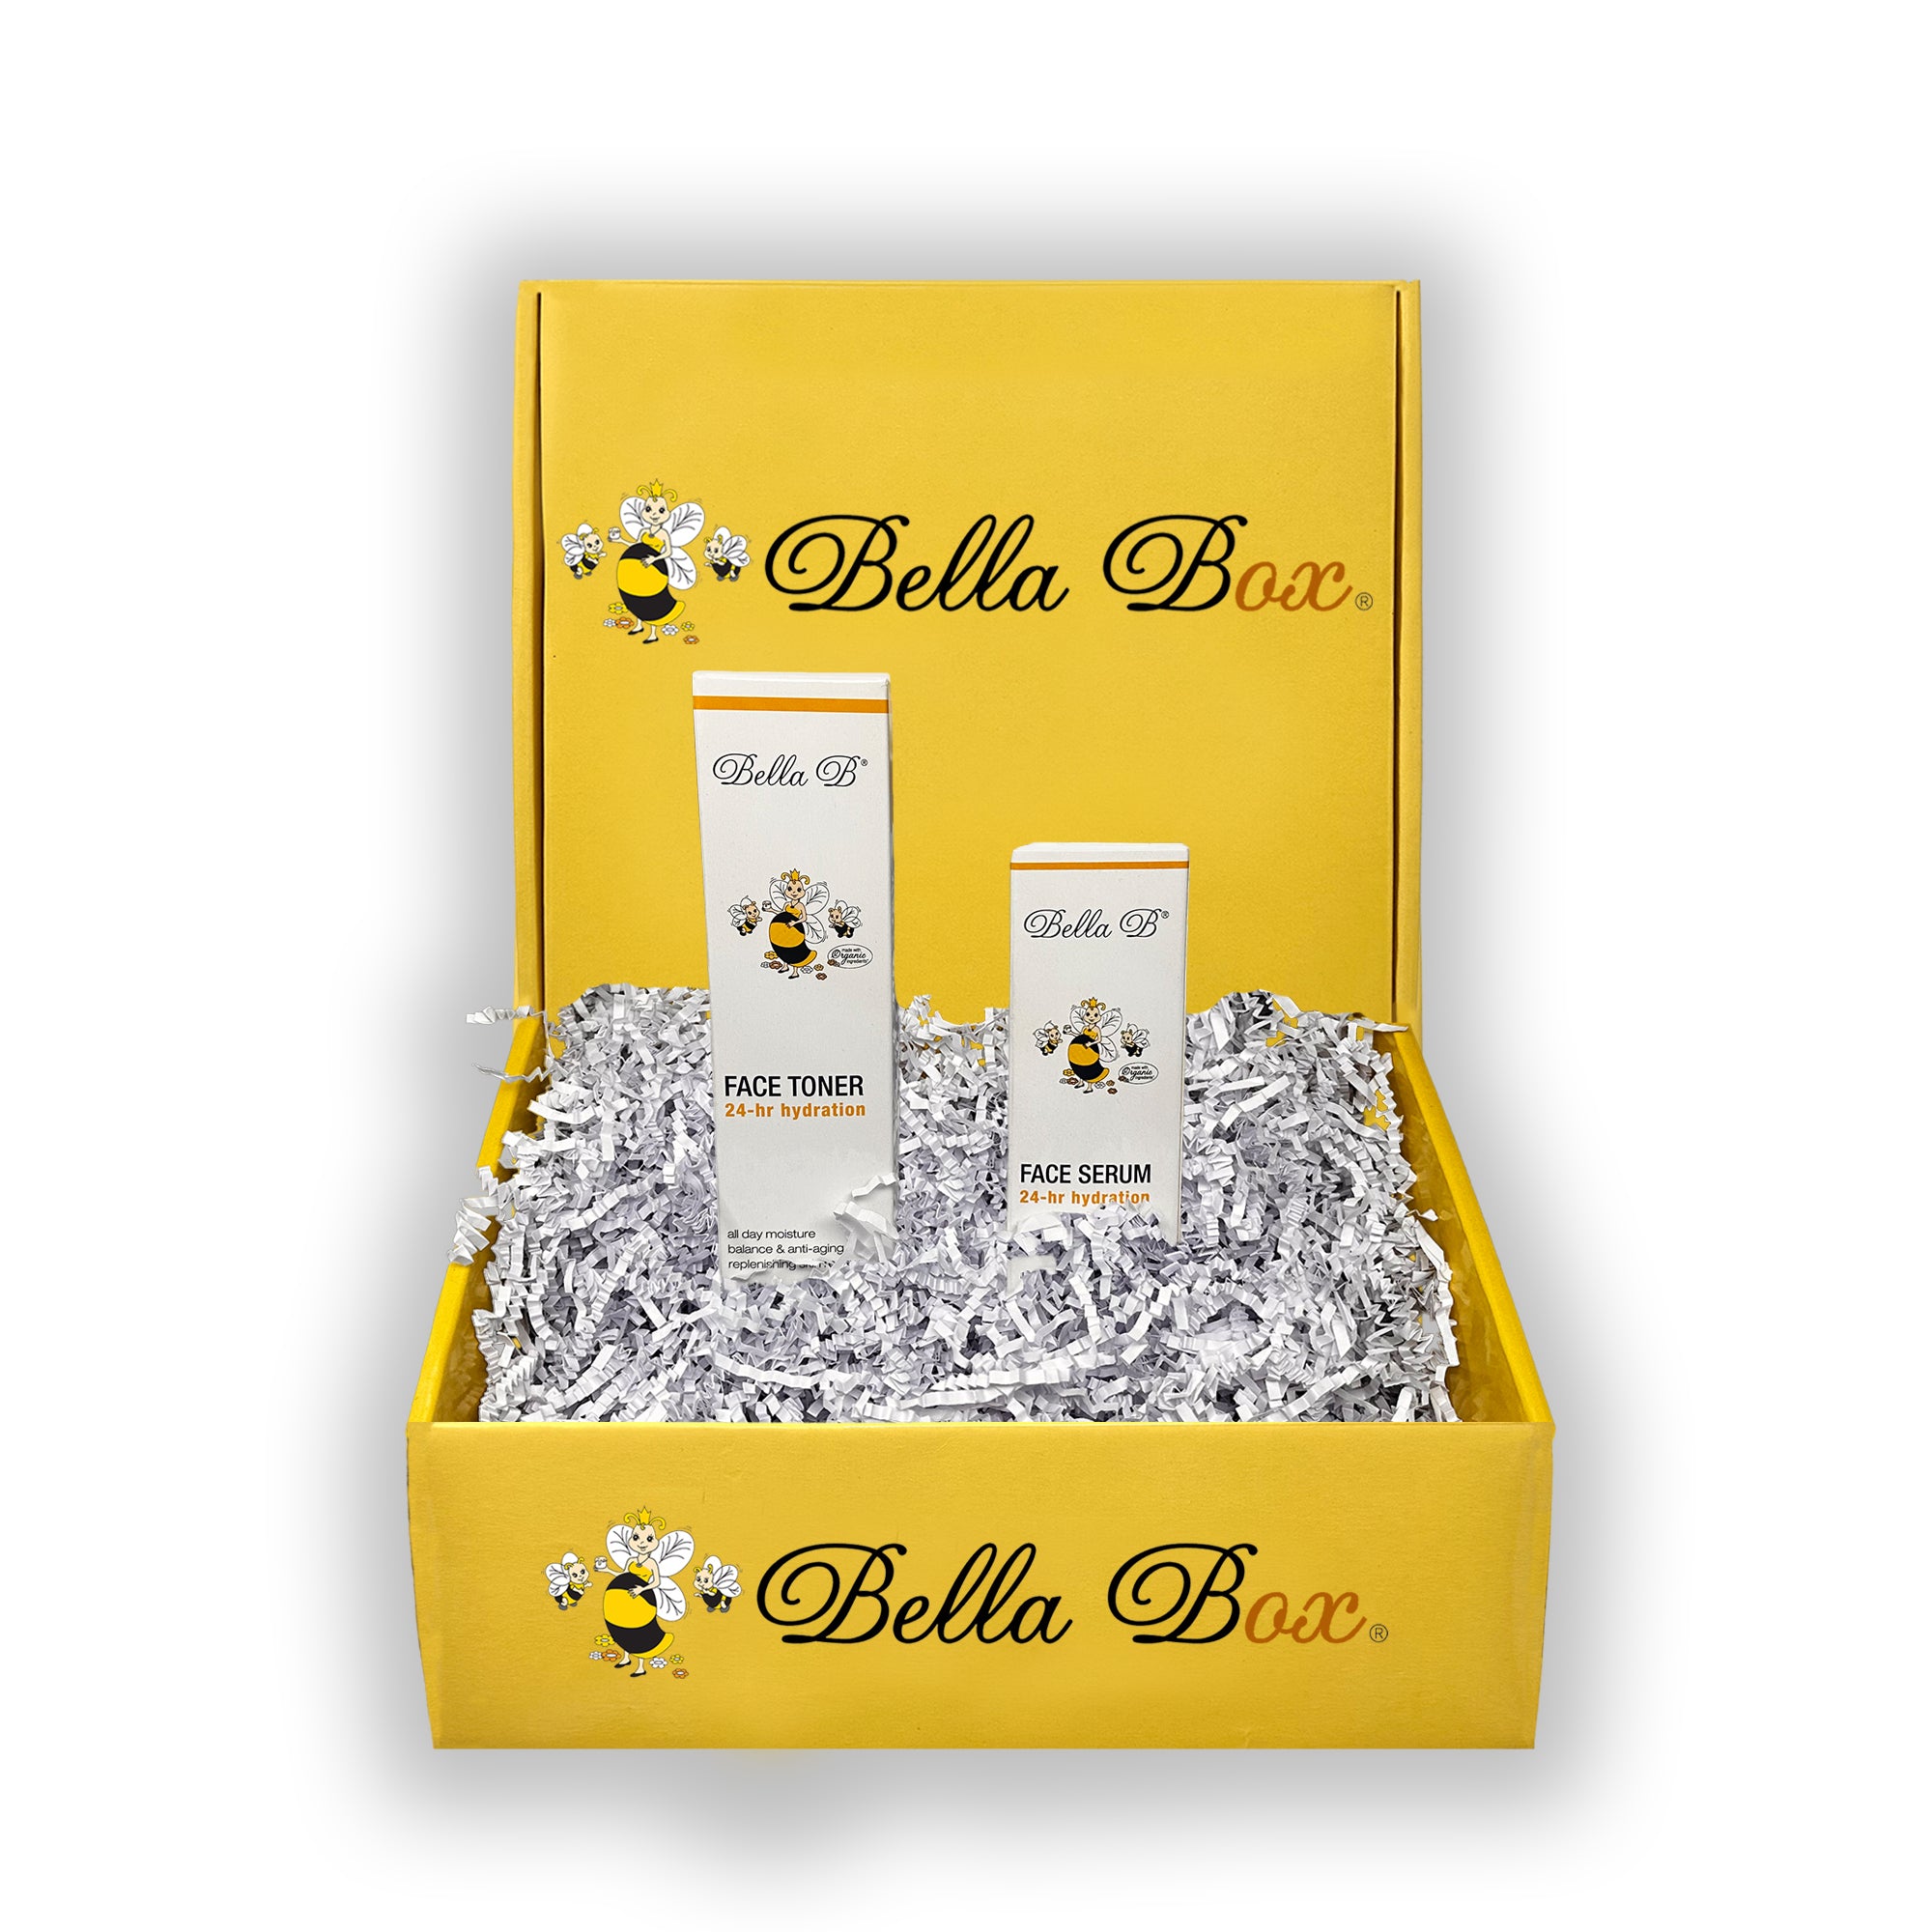 Bella B Gift Set - Face Toner 5.1oz and Face Serum 1.7oz